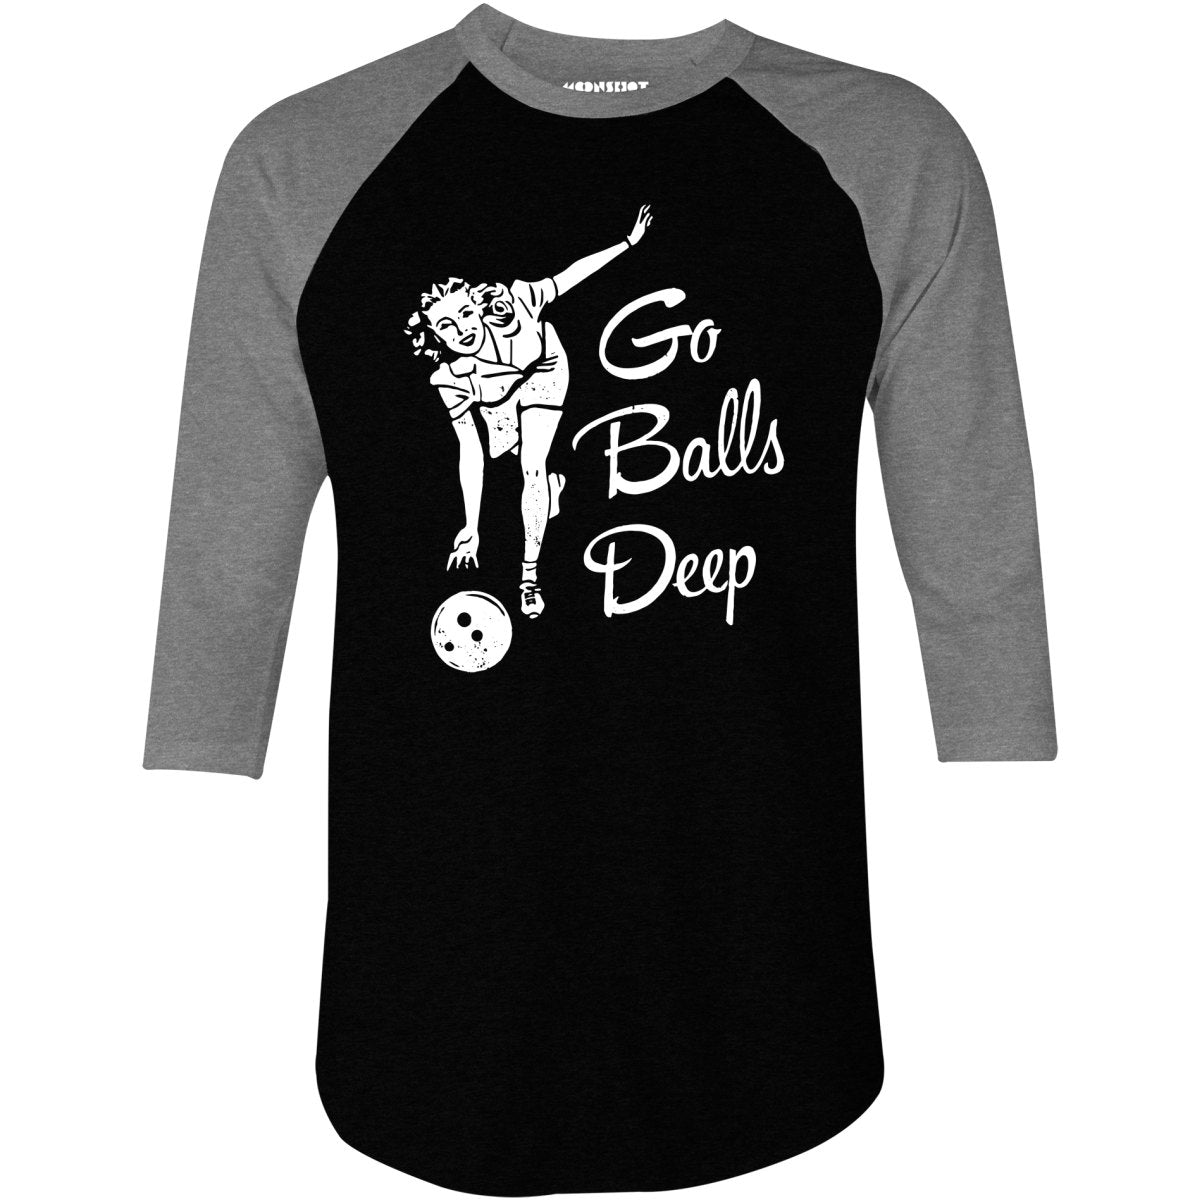 Go Balls Deep - 3/4 Sleeve Raglan T-Shirt